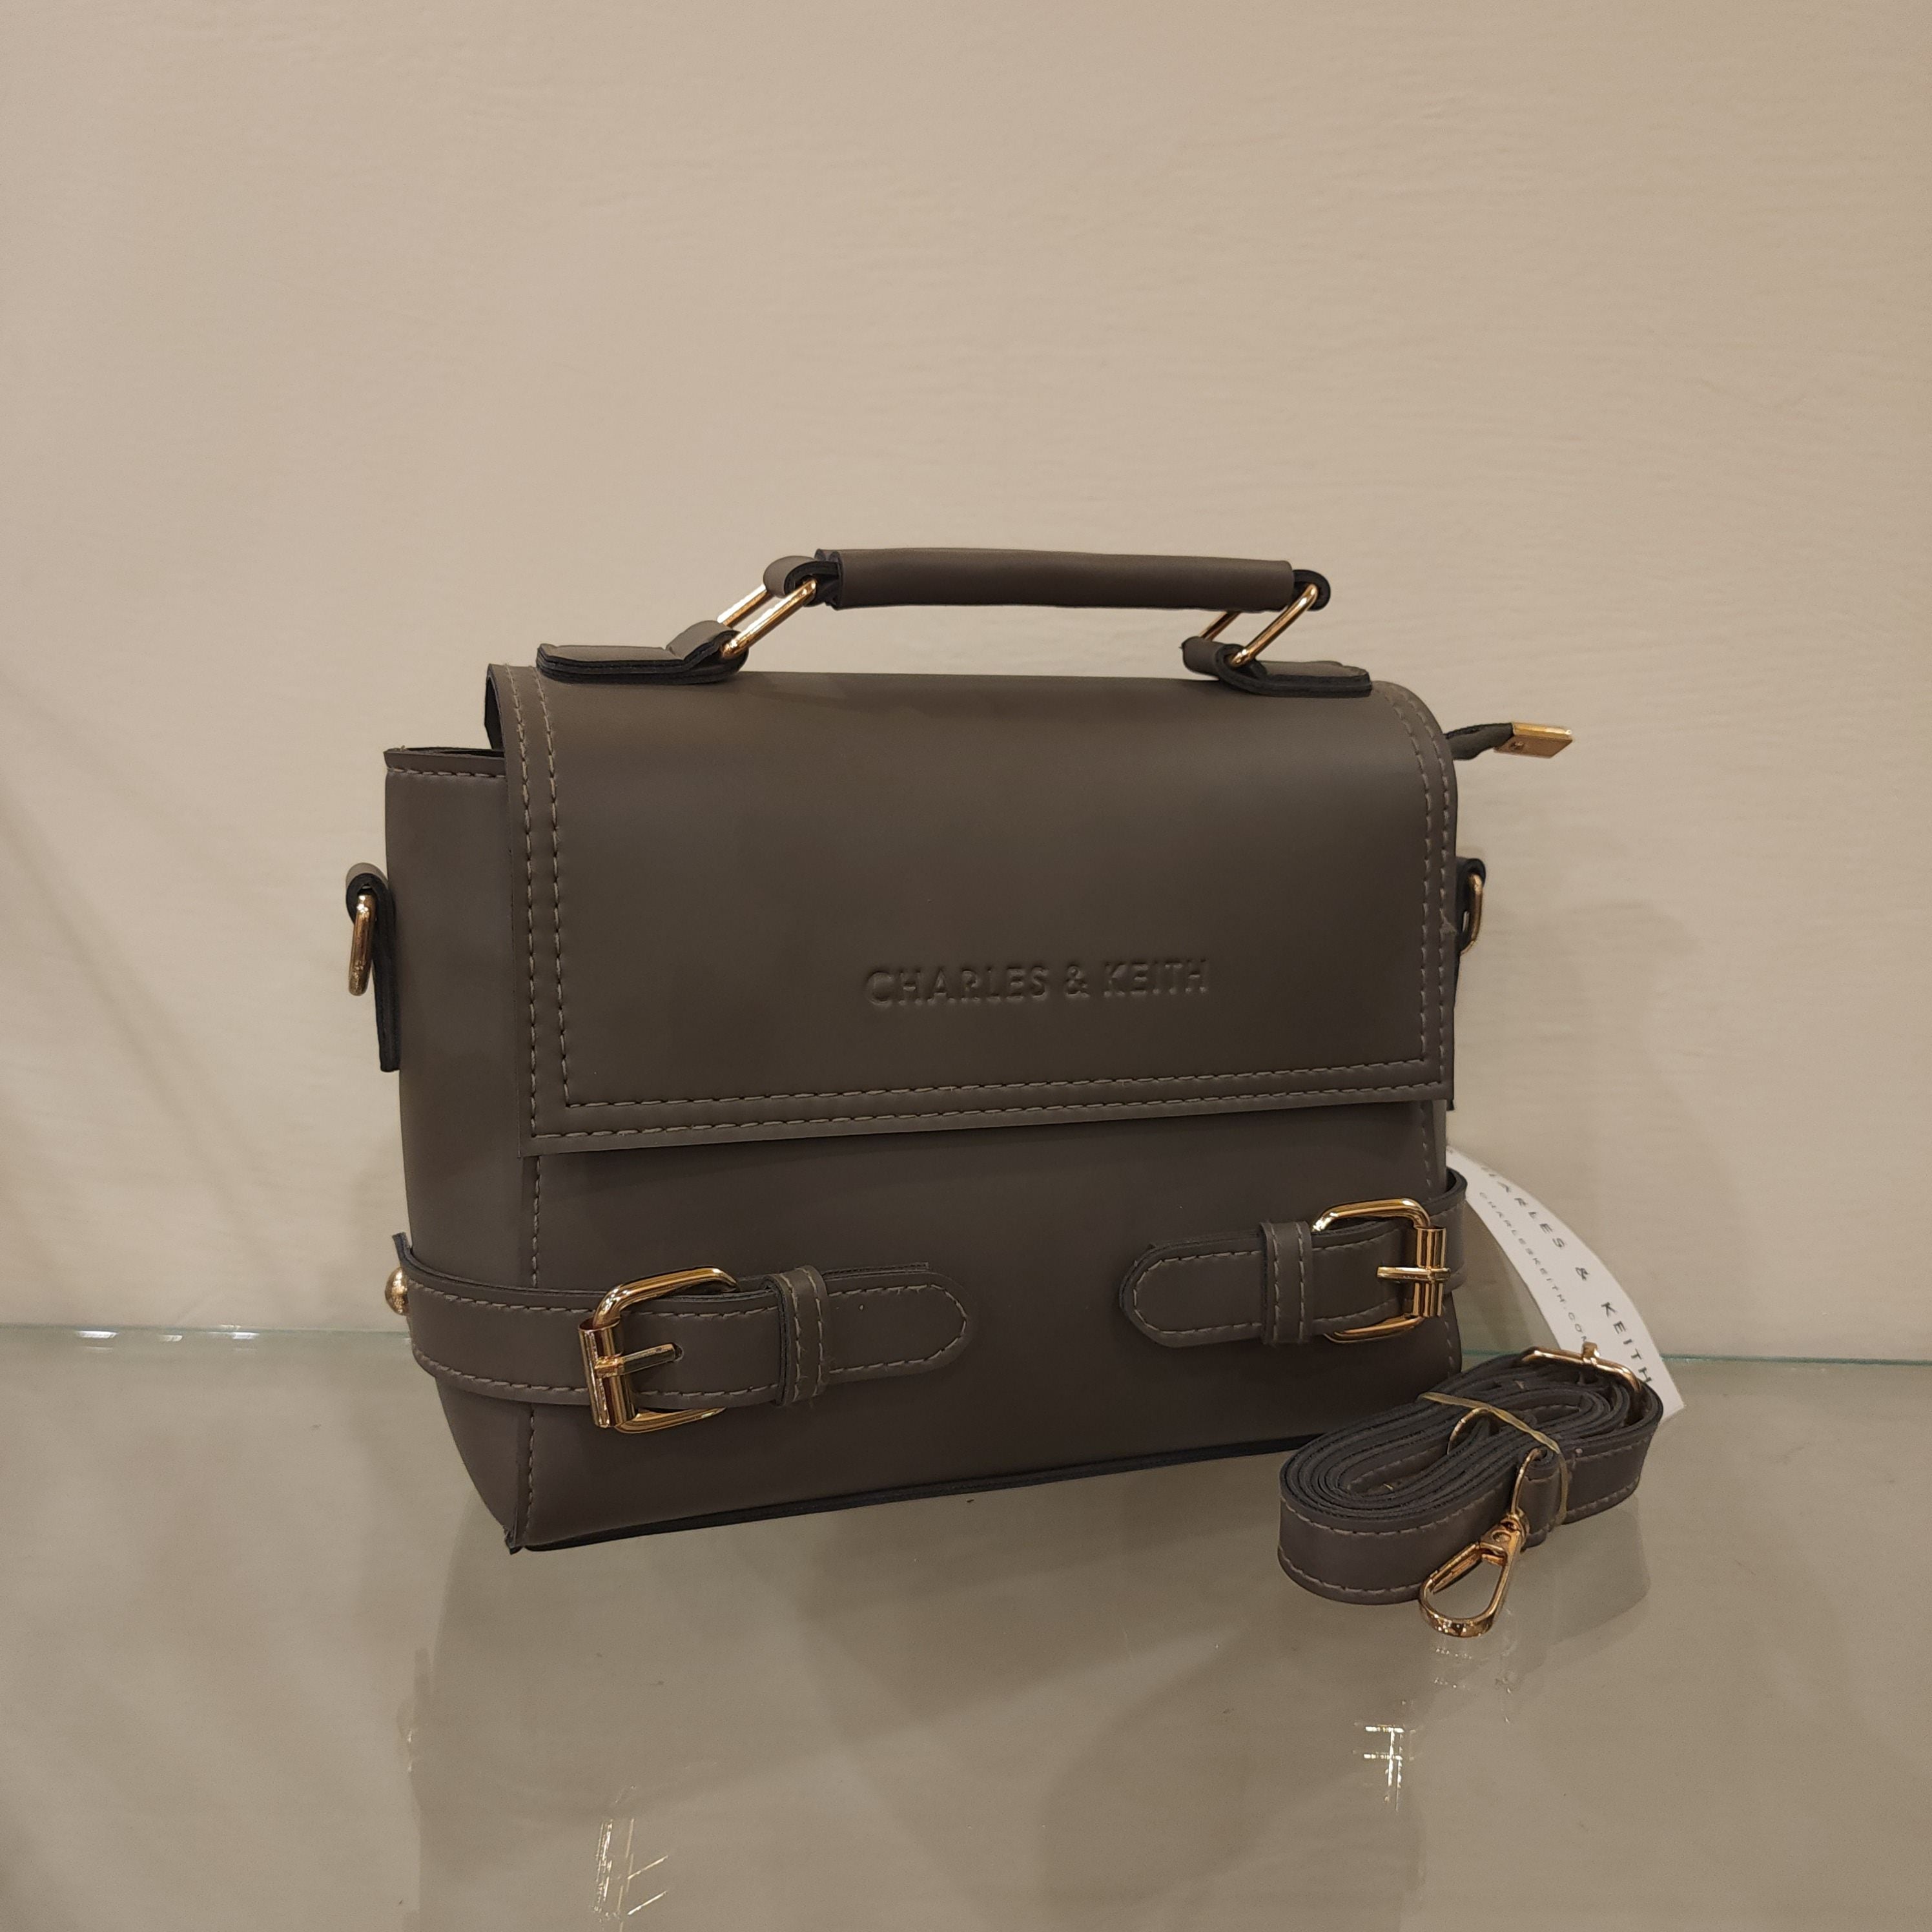 Khaki Crossbody Bag - Maha fashions -  Handbag